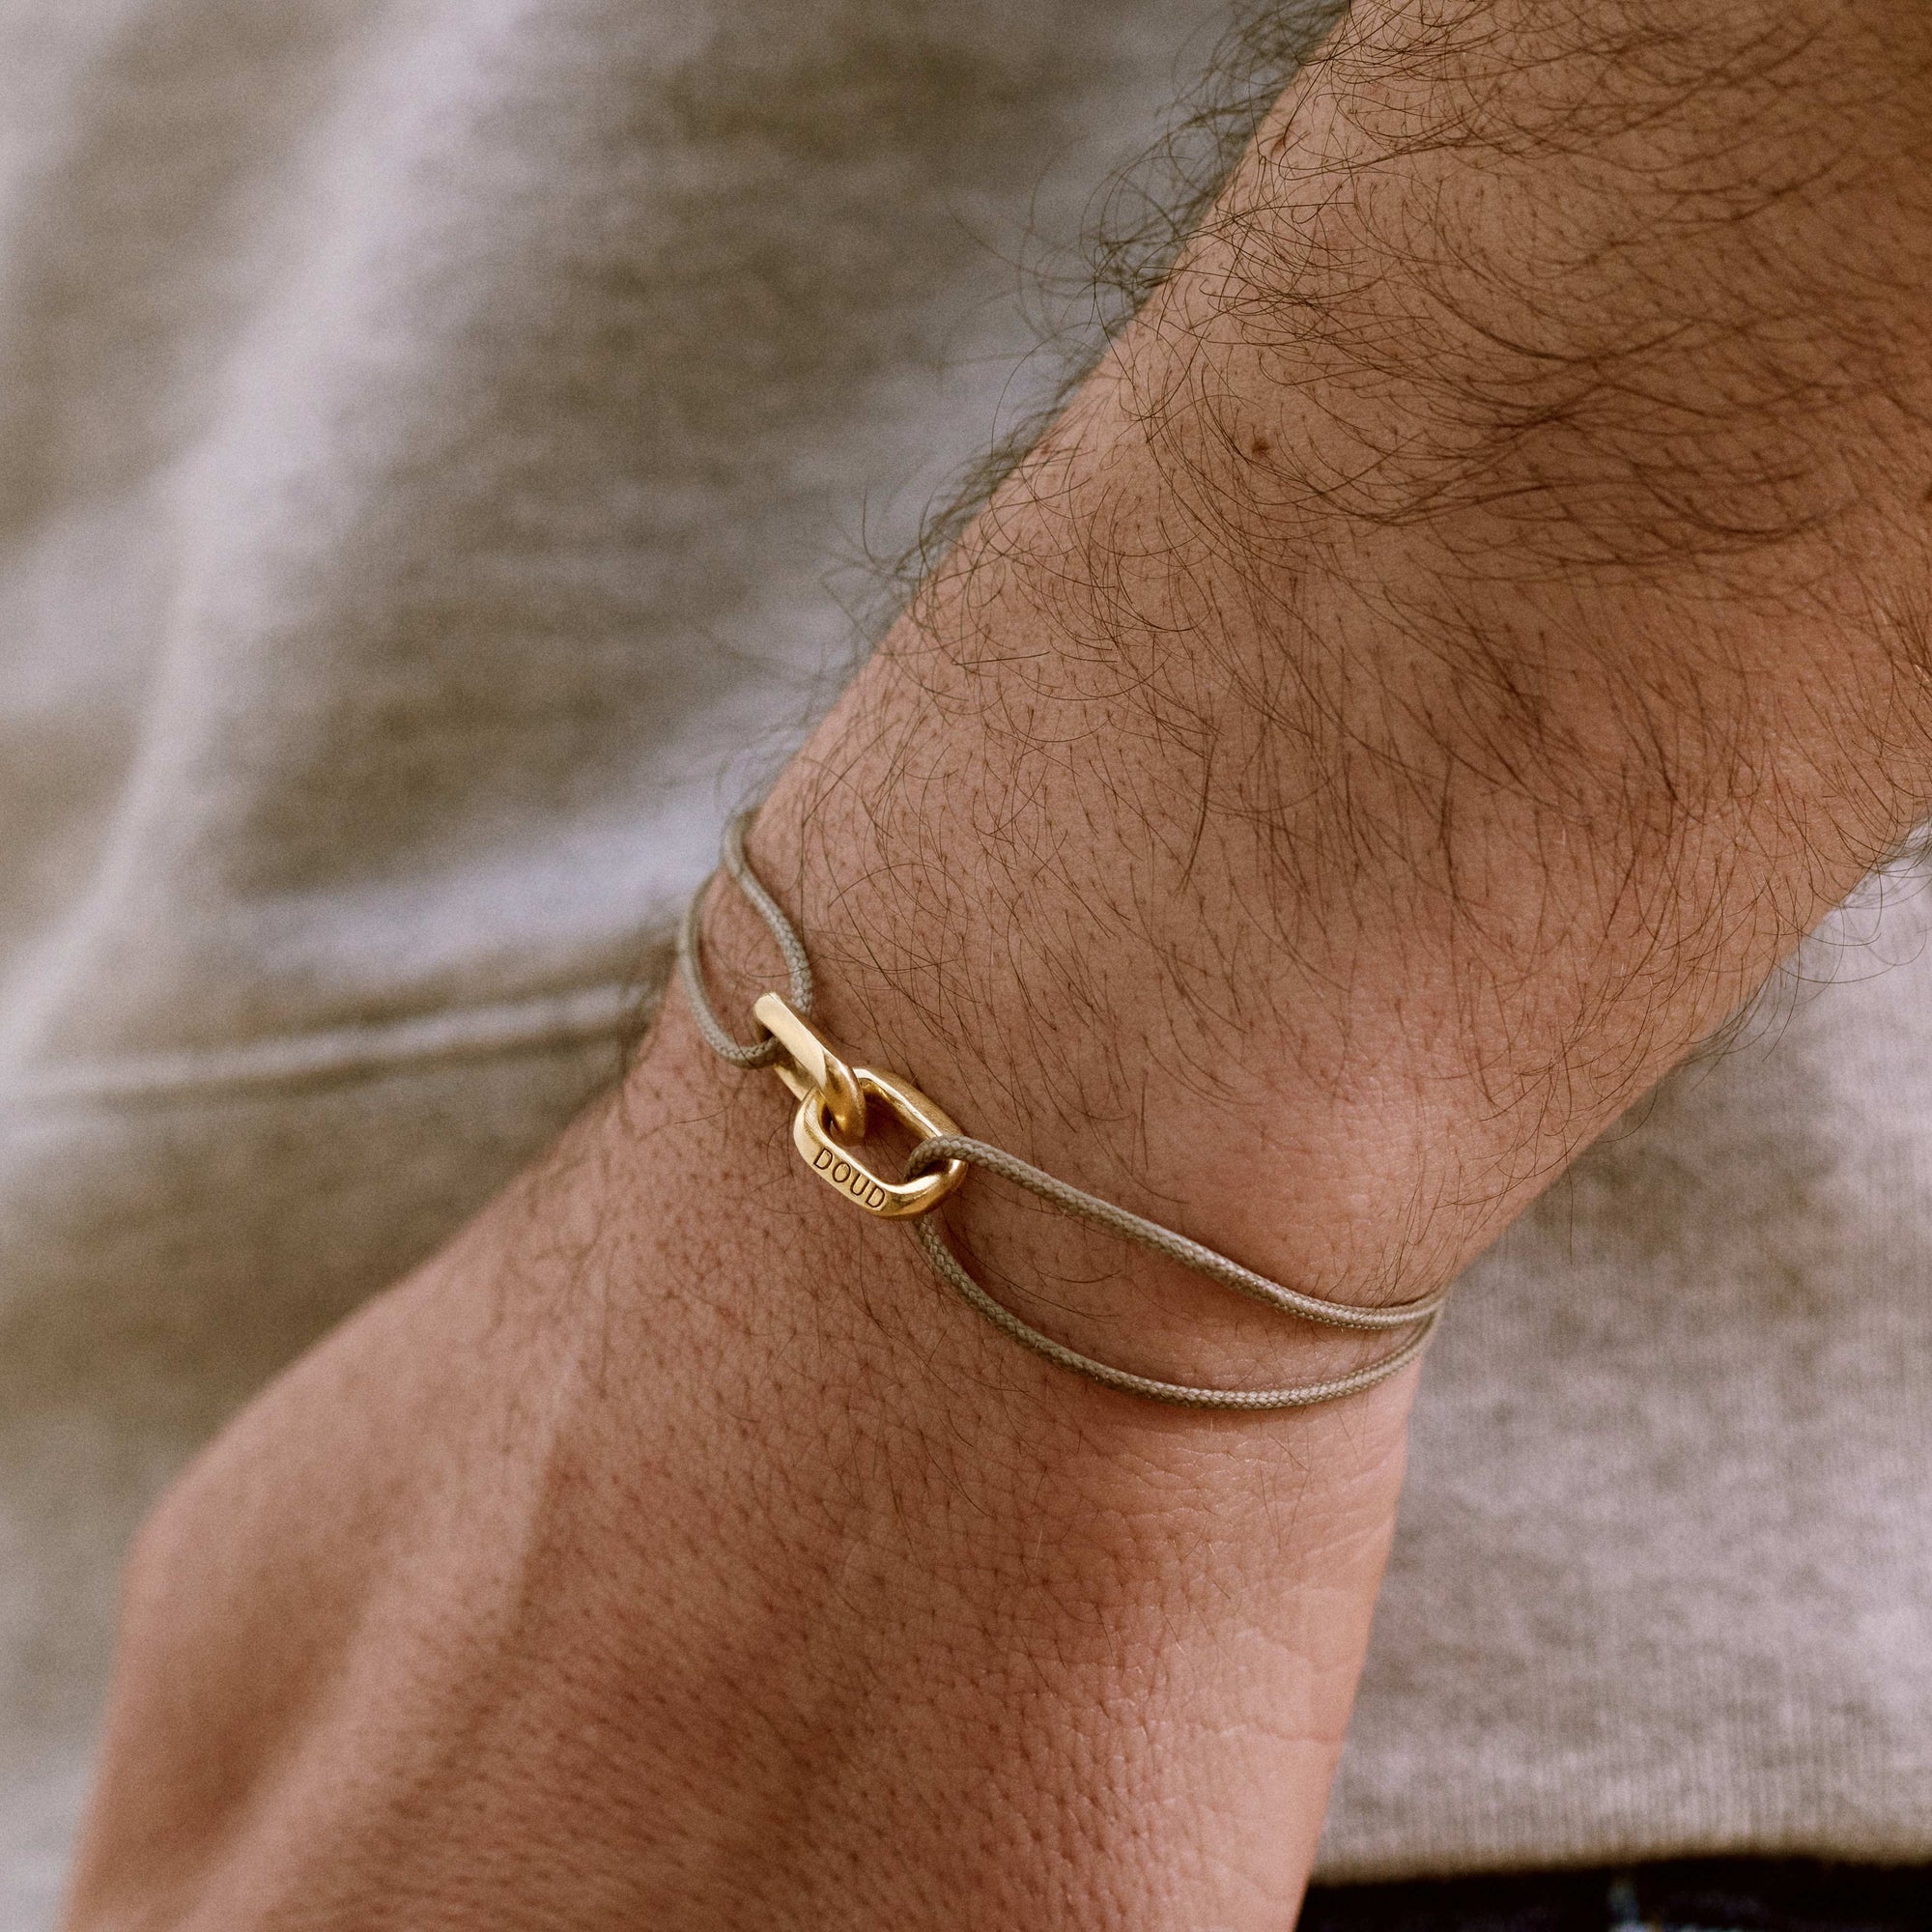 Solid 10K Yellow Gold Diamond Bracelet for Men 3.1ct by Luxurman 501603